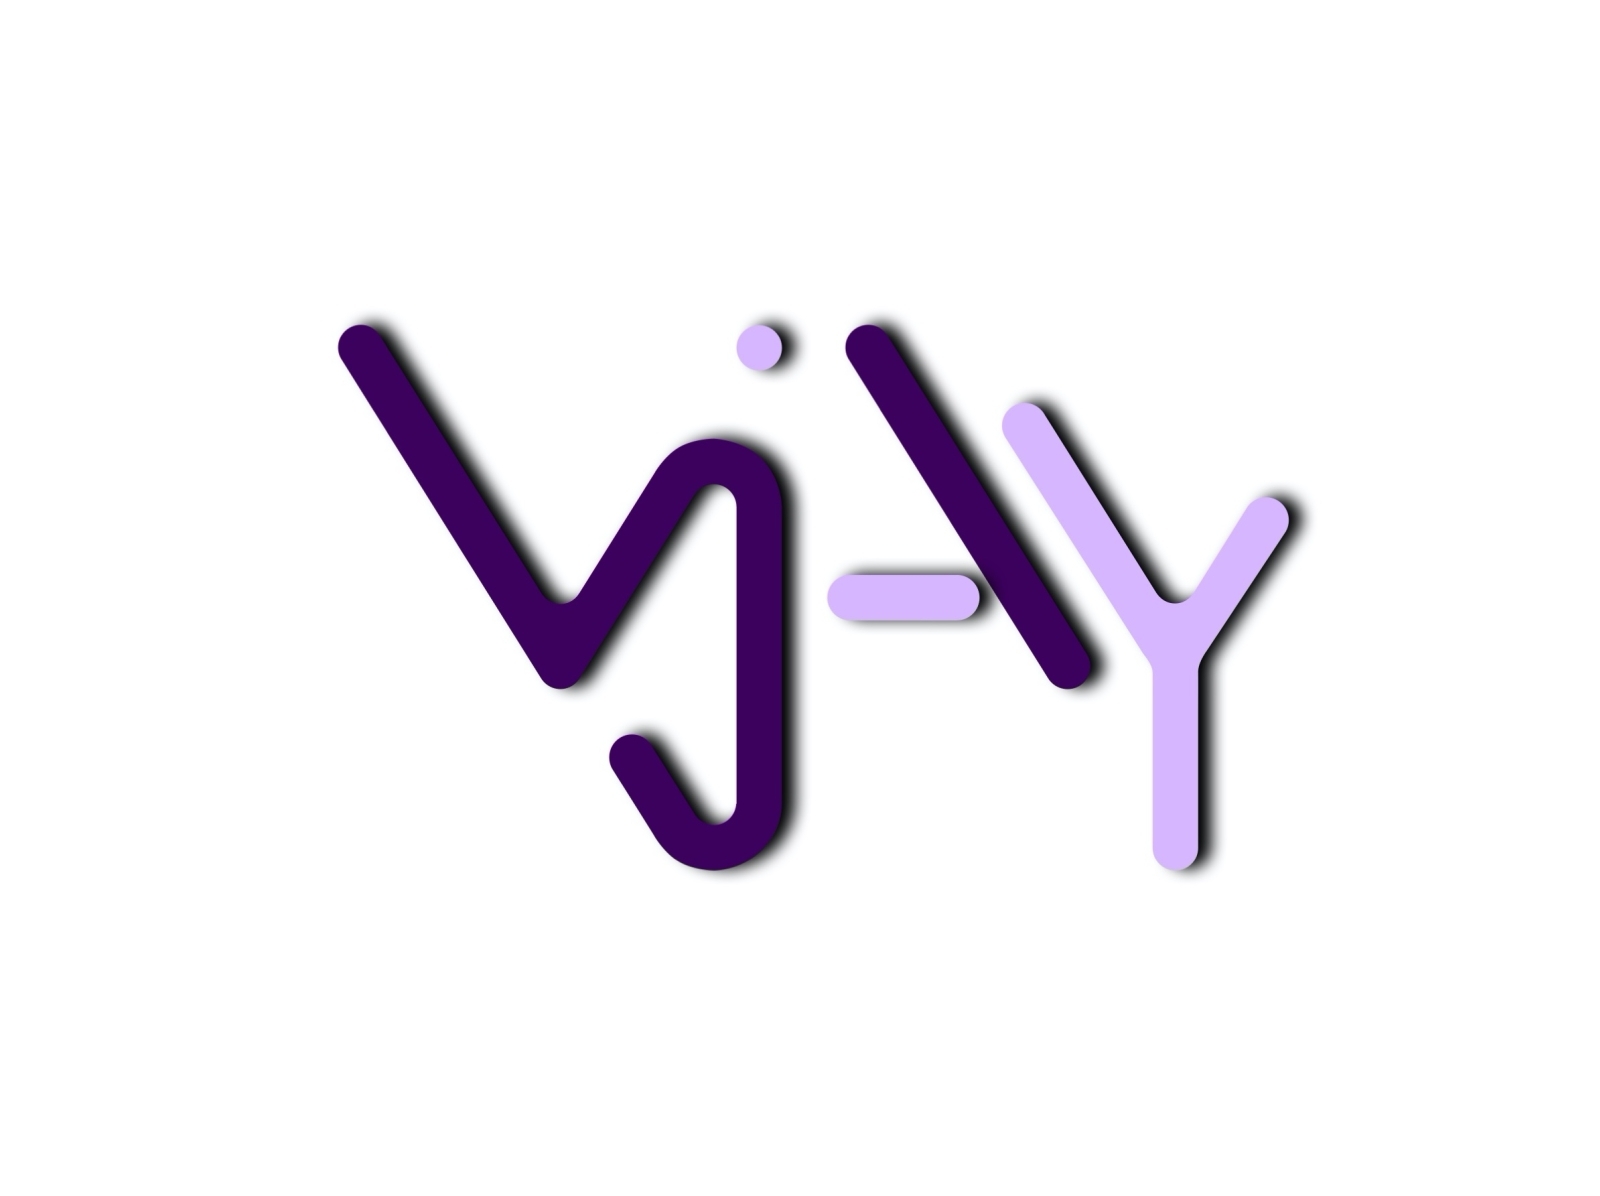 Vijay | Name Design by Garvit Shah on Dribbble